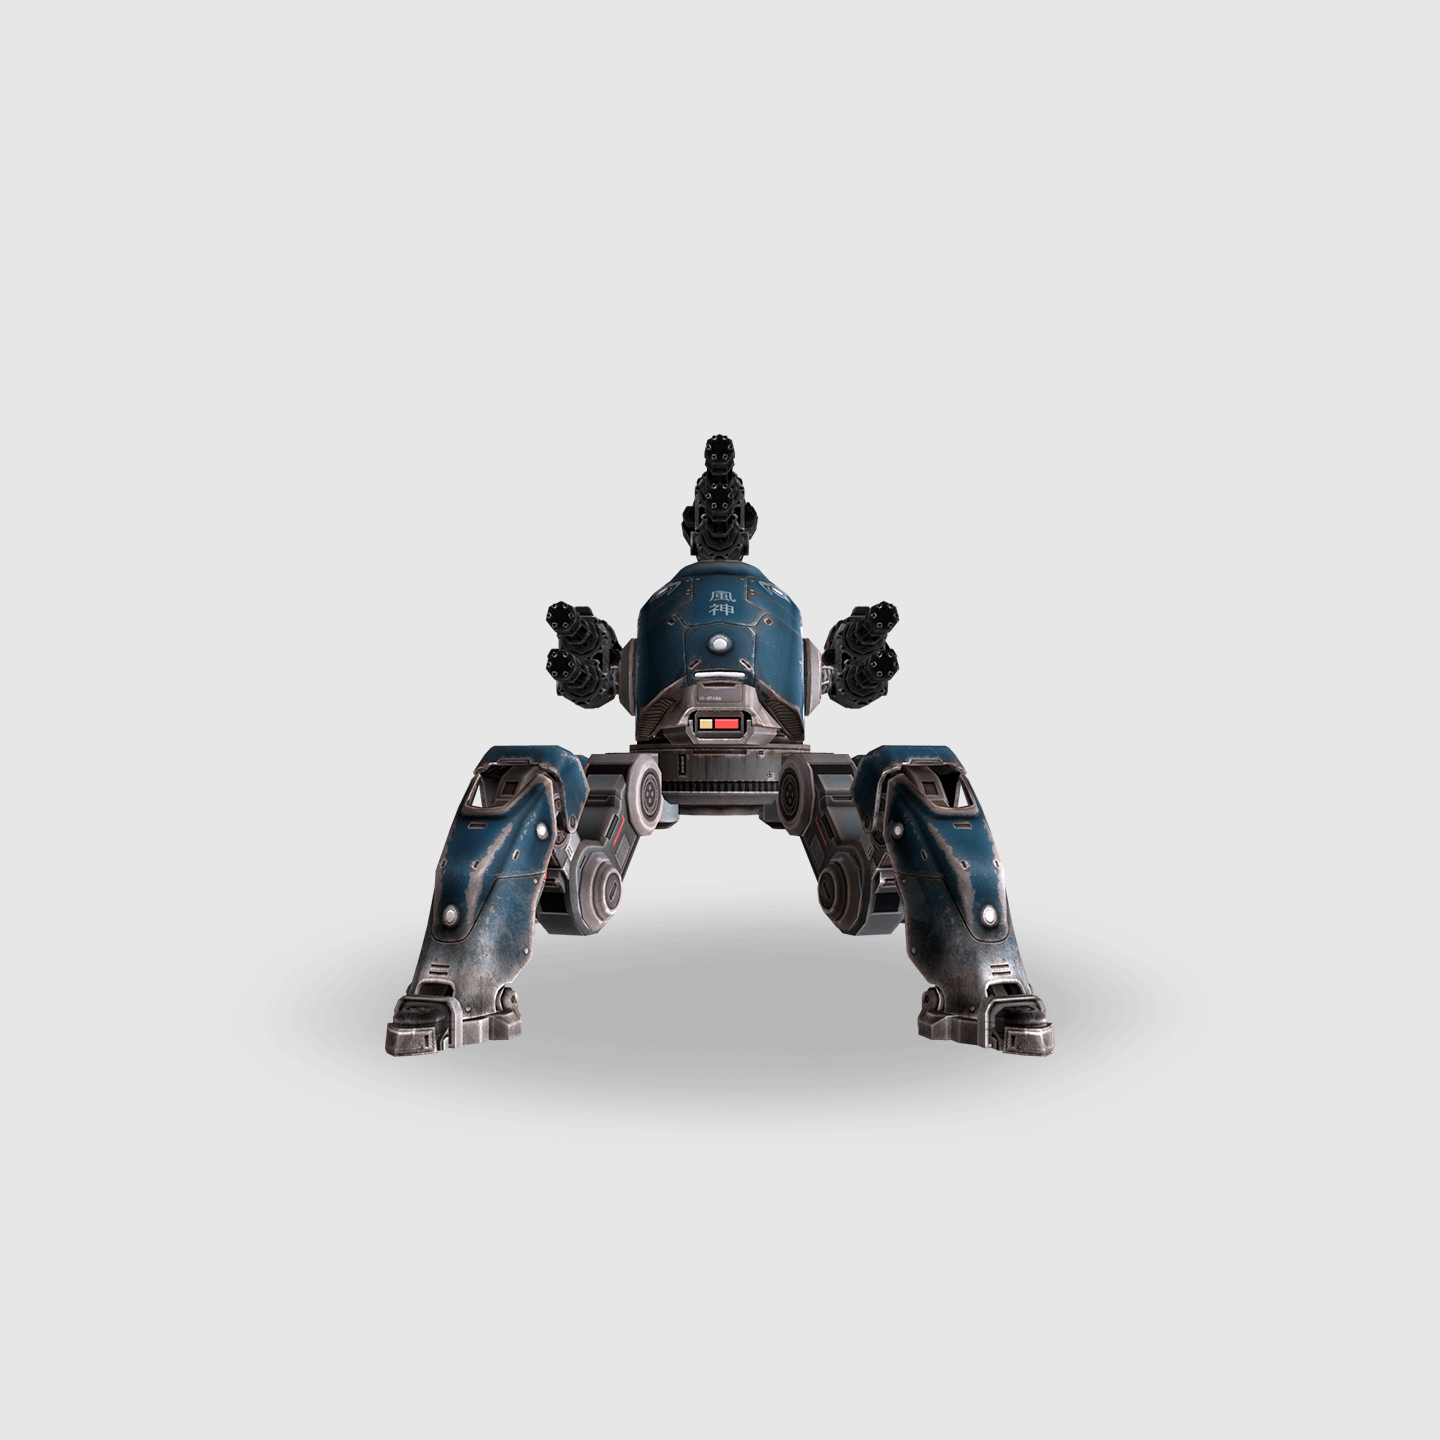 Fujin on Power Plant - War Robots1440 x 1440